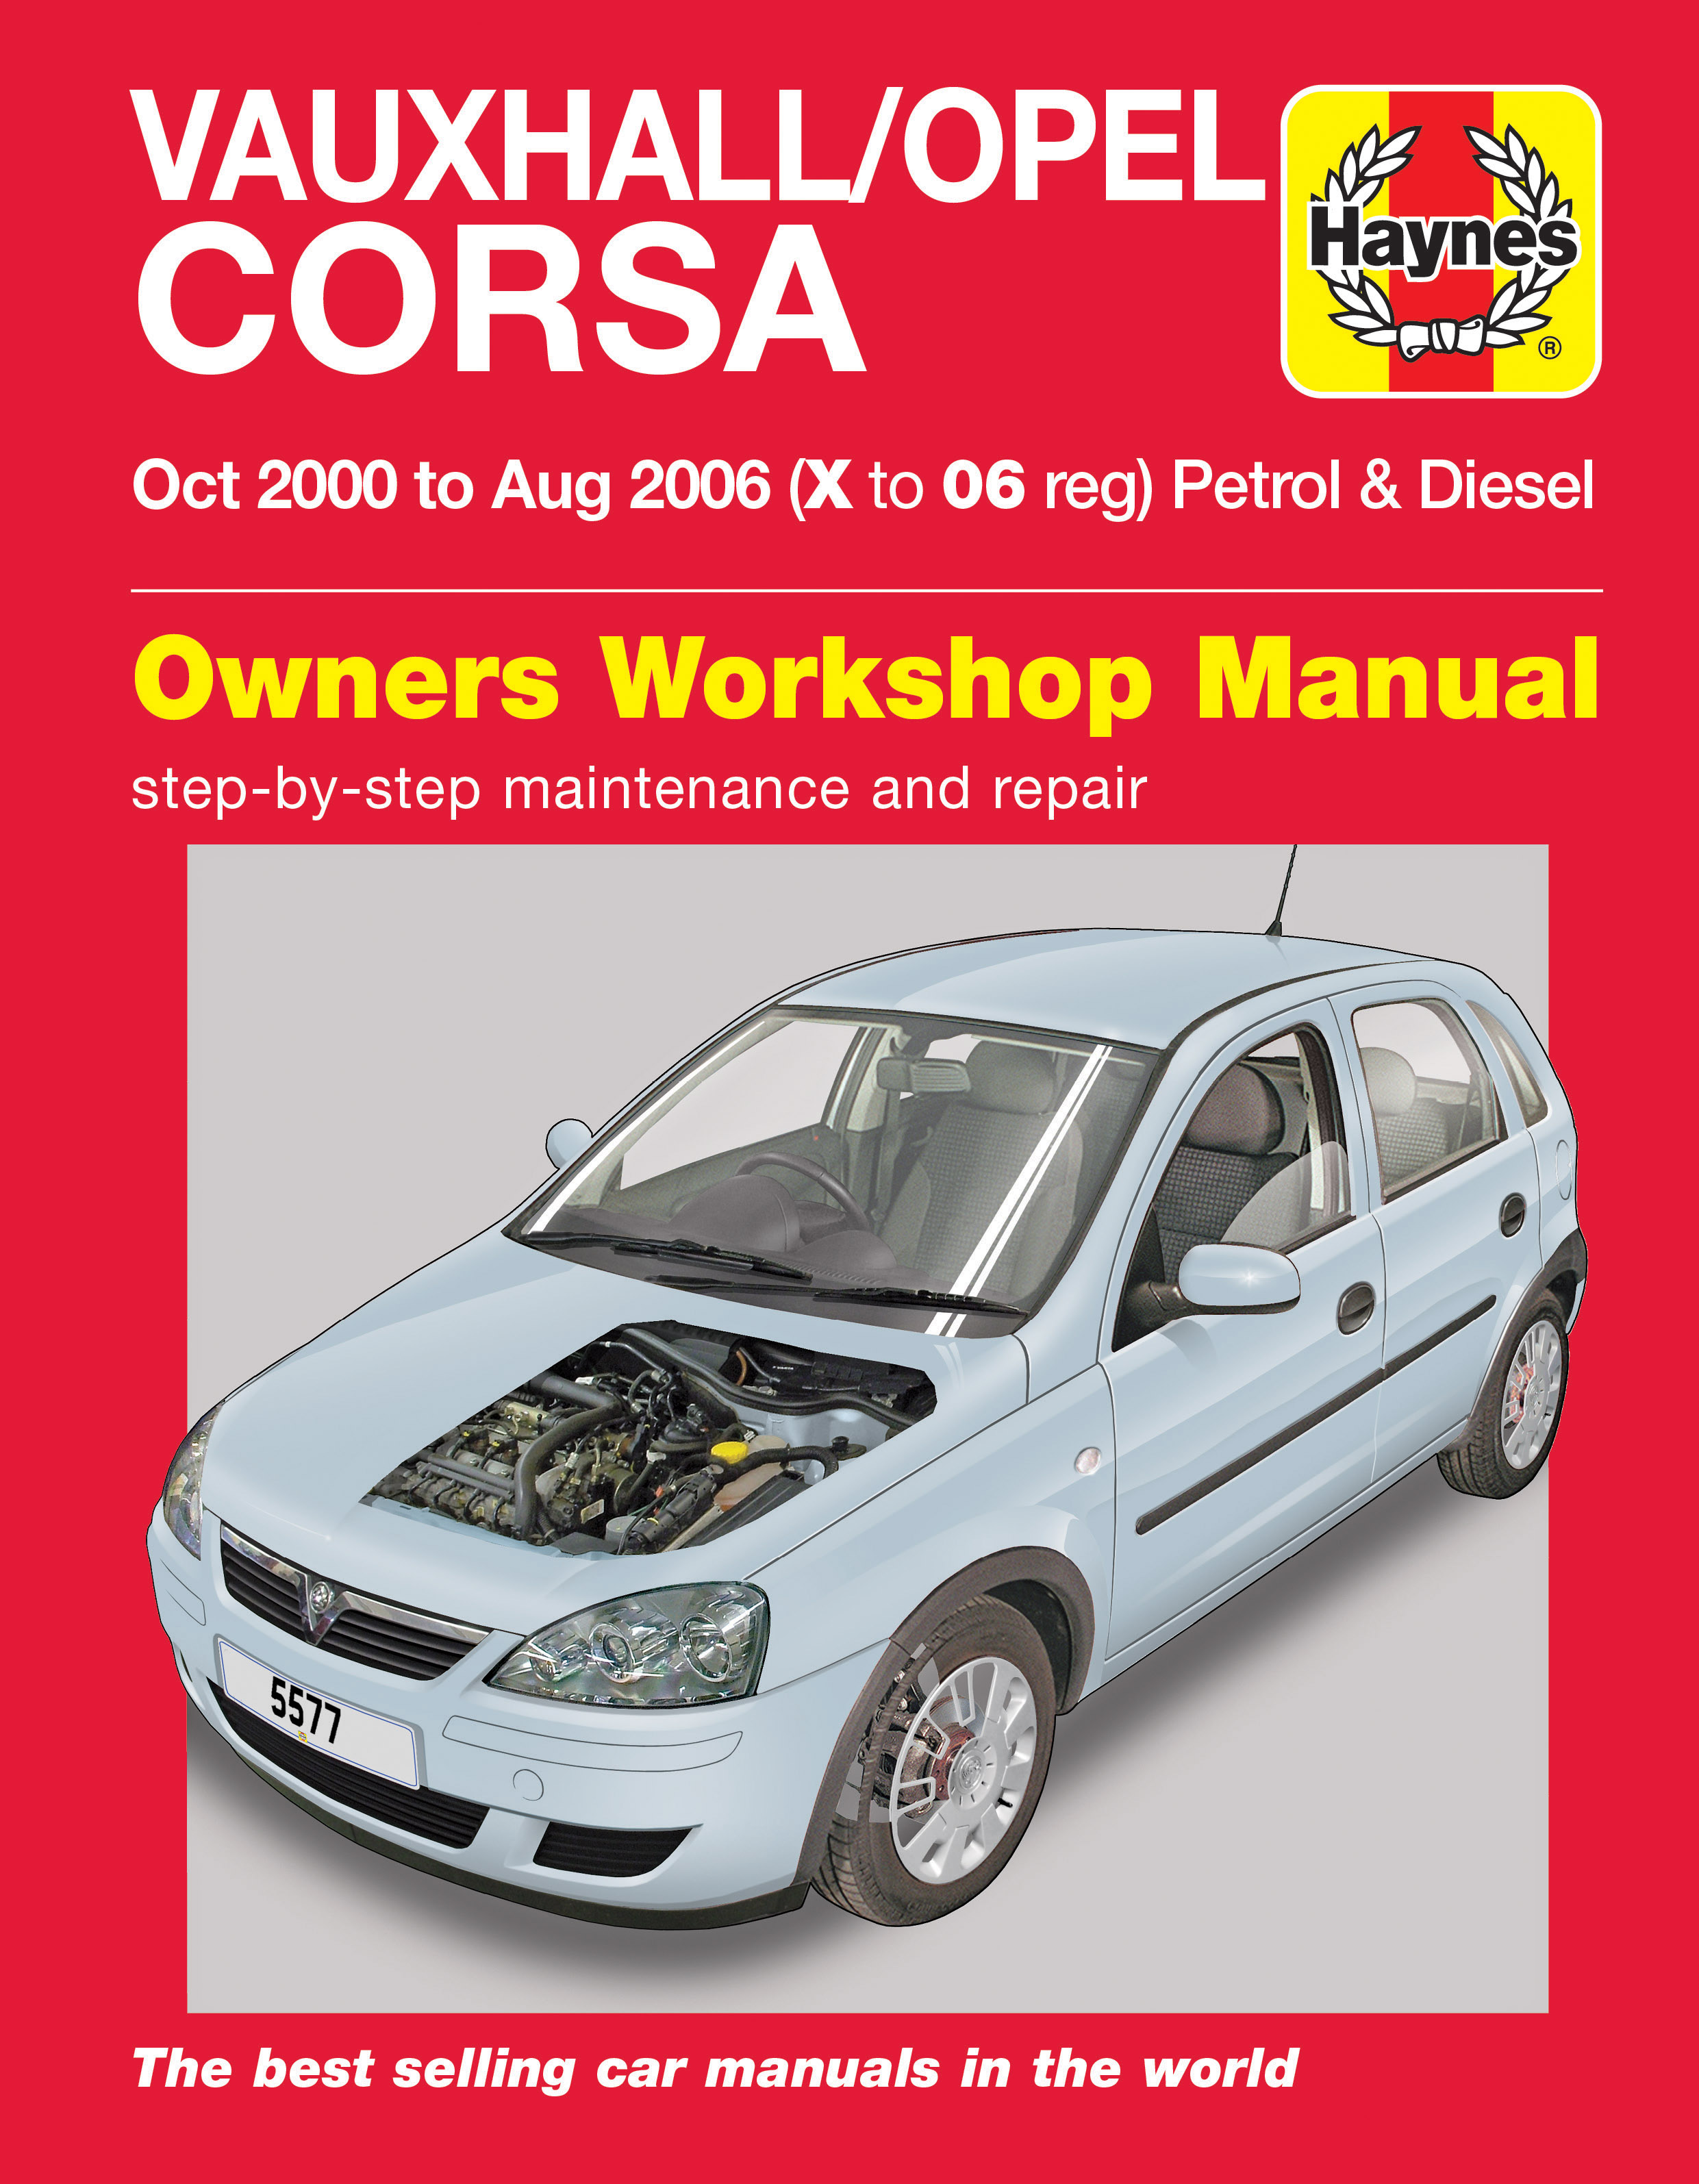 64 to 18 Workshop Manual 15-18 6428 Haynes Vauxhall/Opel Corsa 